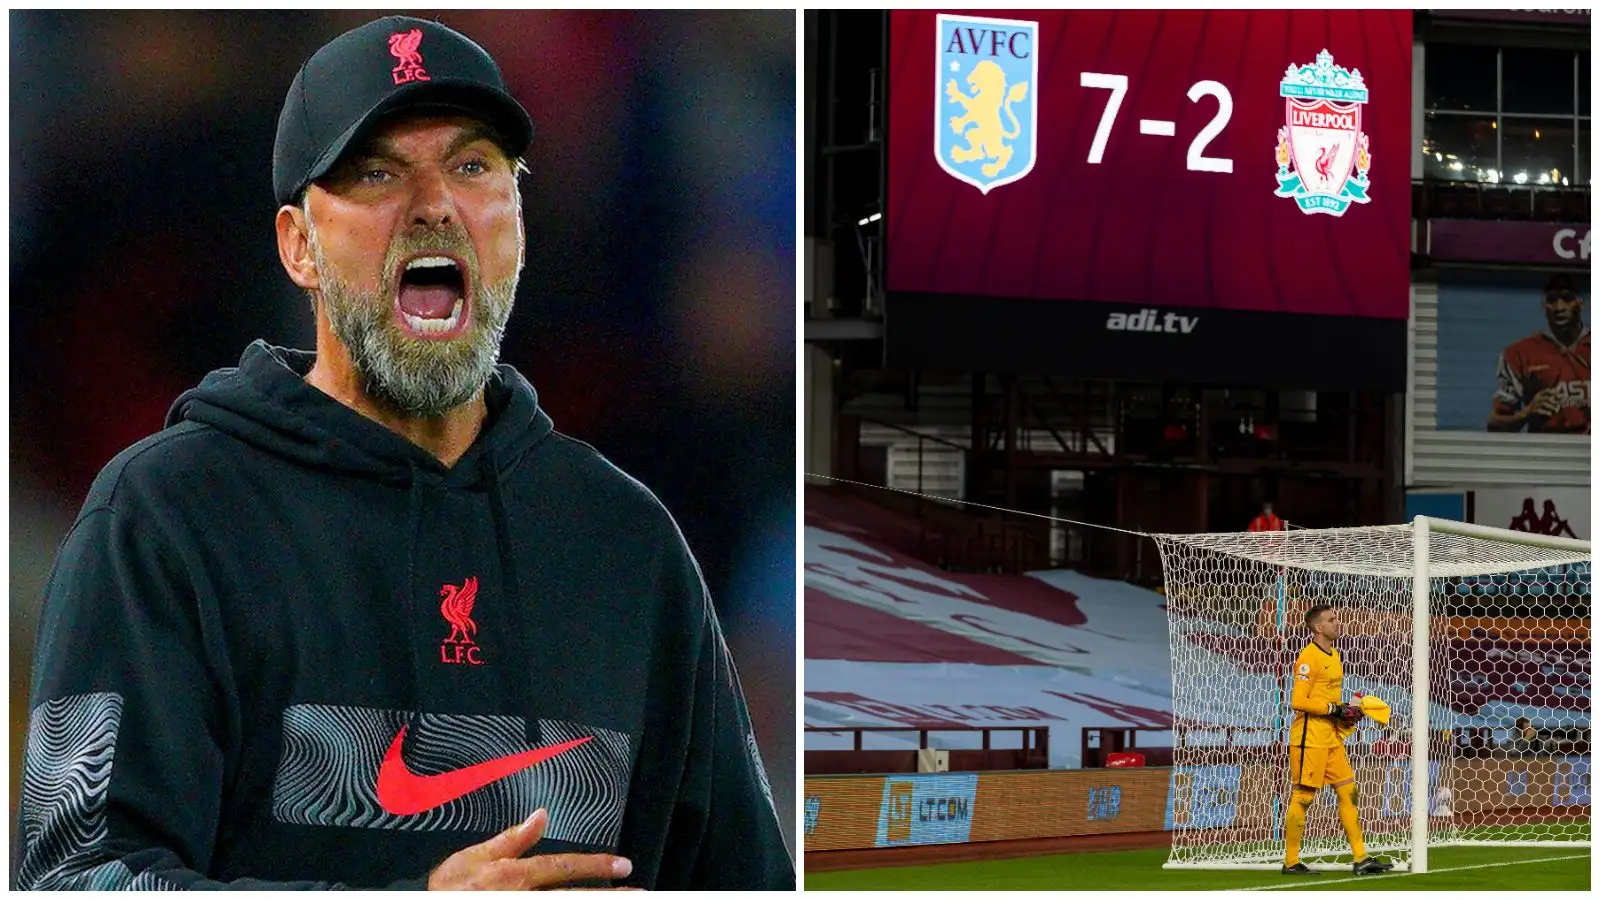 Jurgen Klopp shouts as a scoreboard shows Aston Villa 7-2 Liverpool.